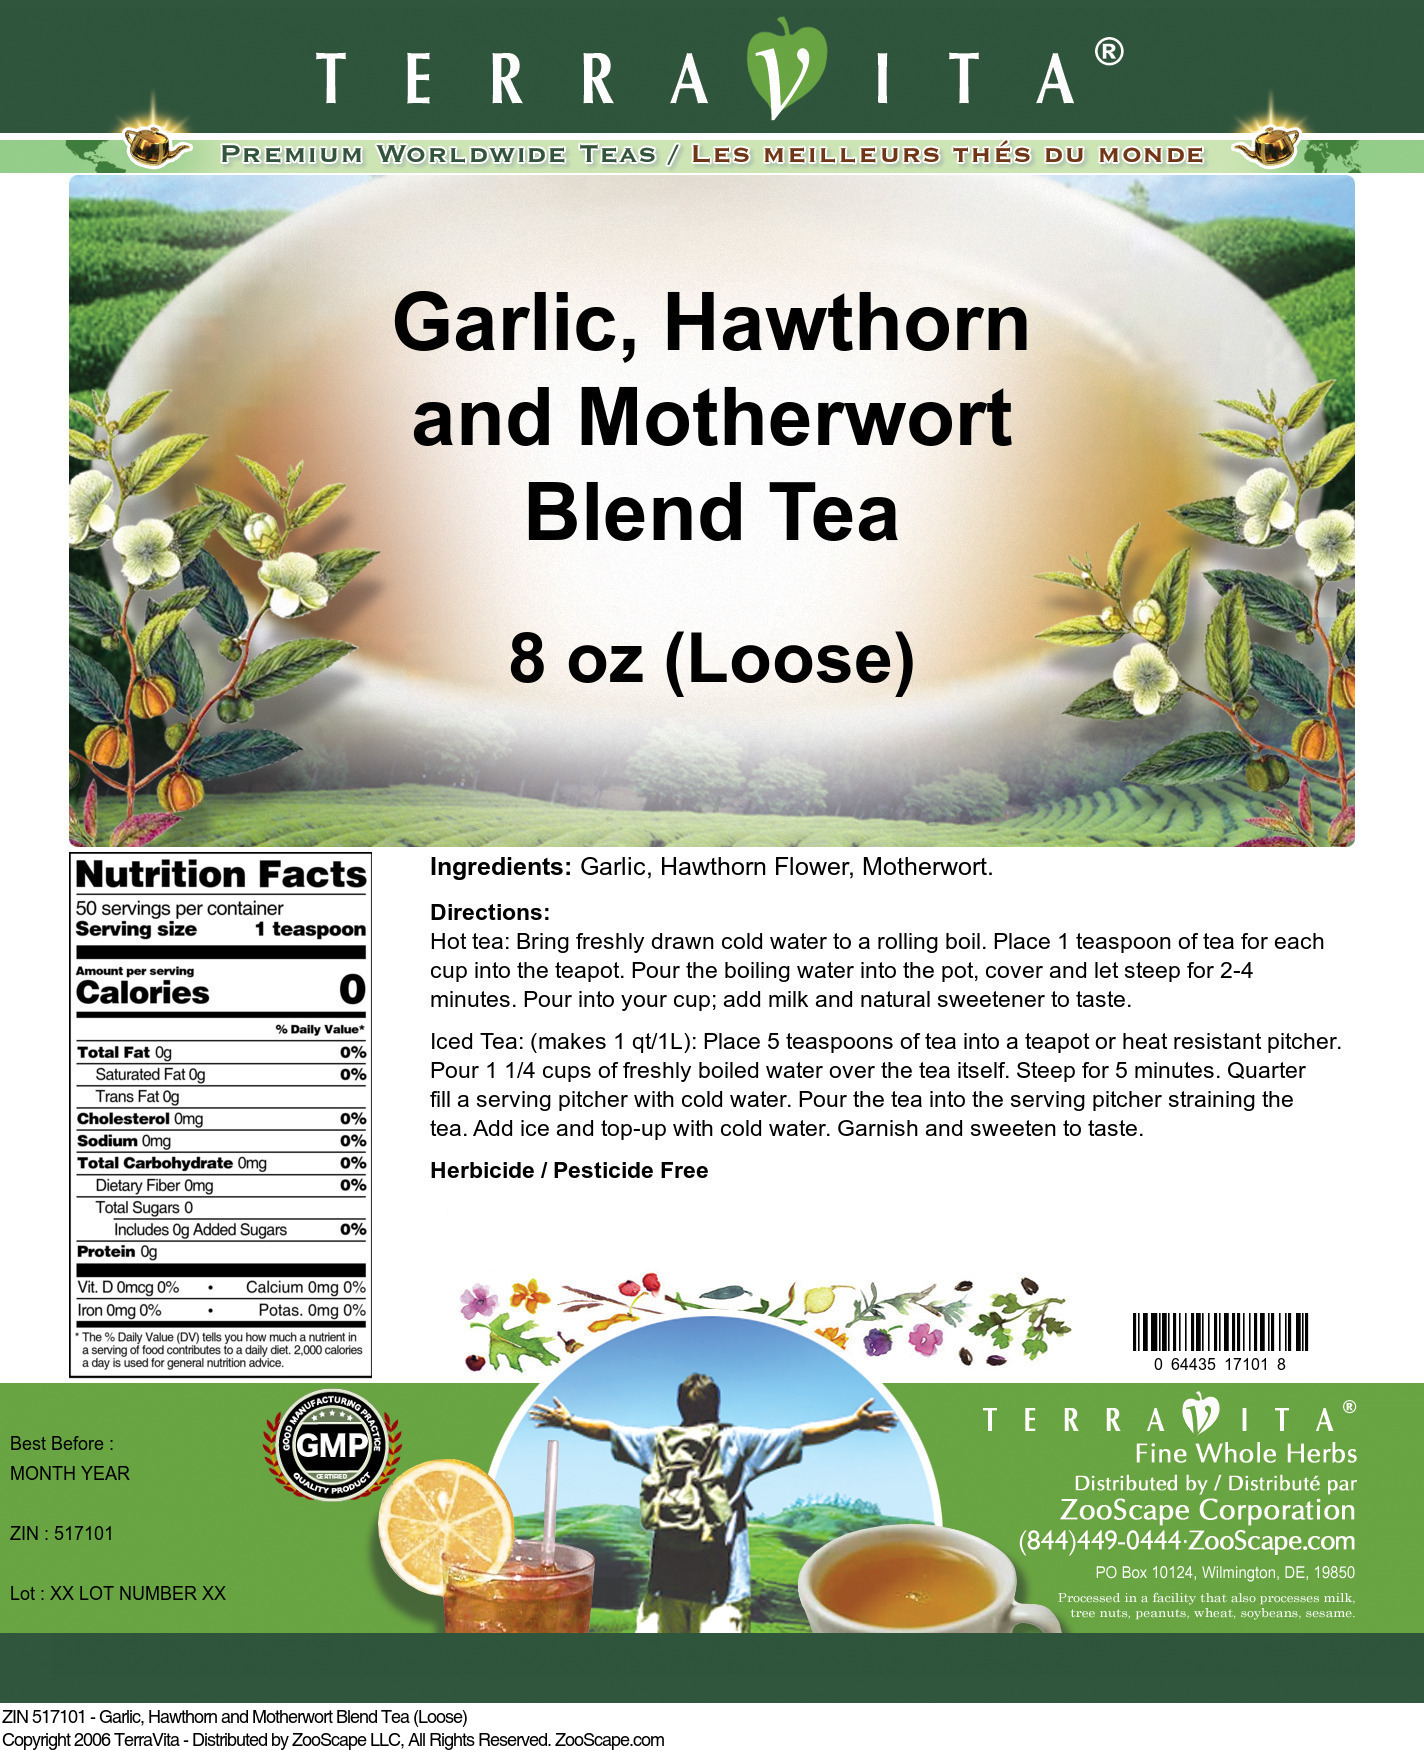 Garlic, Hawthorn and Motherwort Blend Tea (Loose) - Label